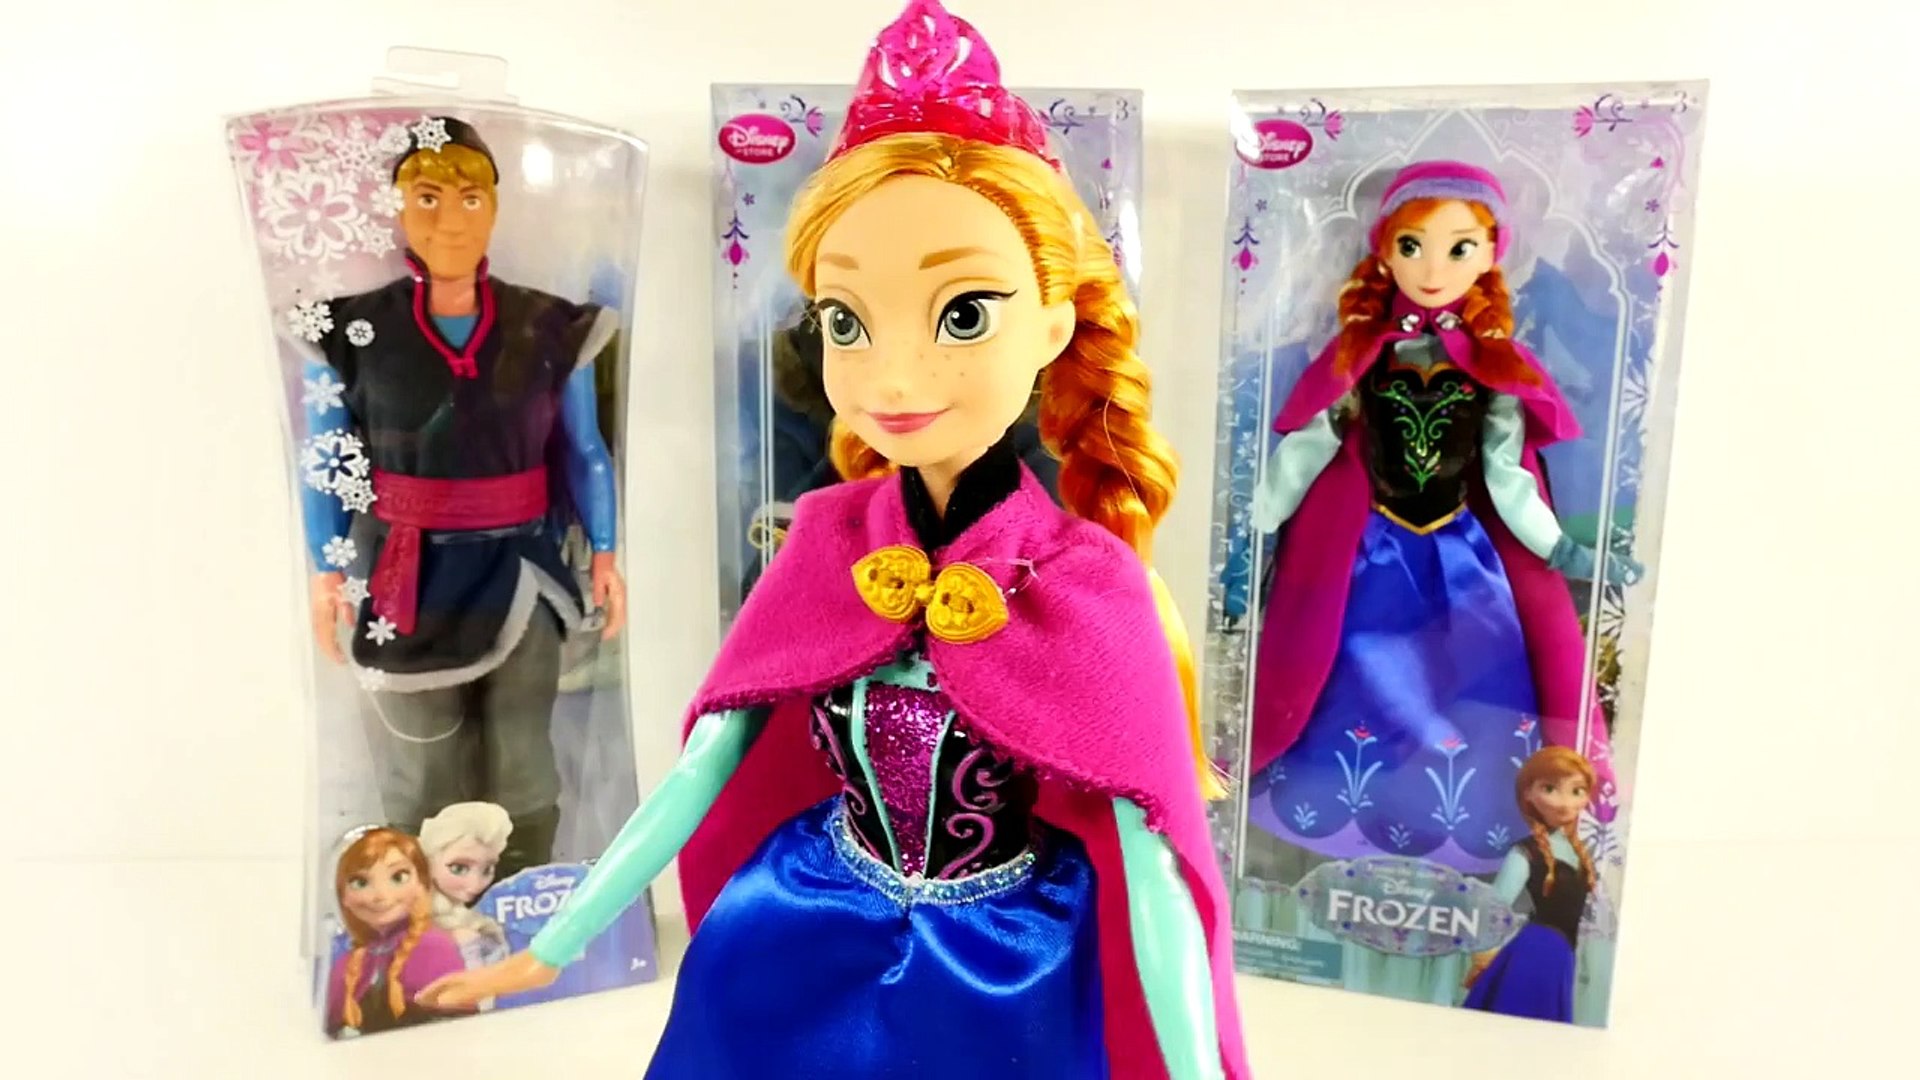 DISNEY FROZEN Barbie Doll Comparison Mattel vs Disney Store Princess Anna  and Kristoff - video Dailymotion